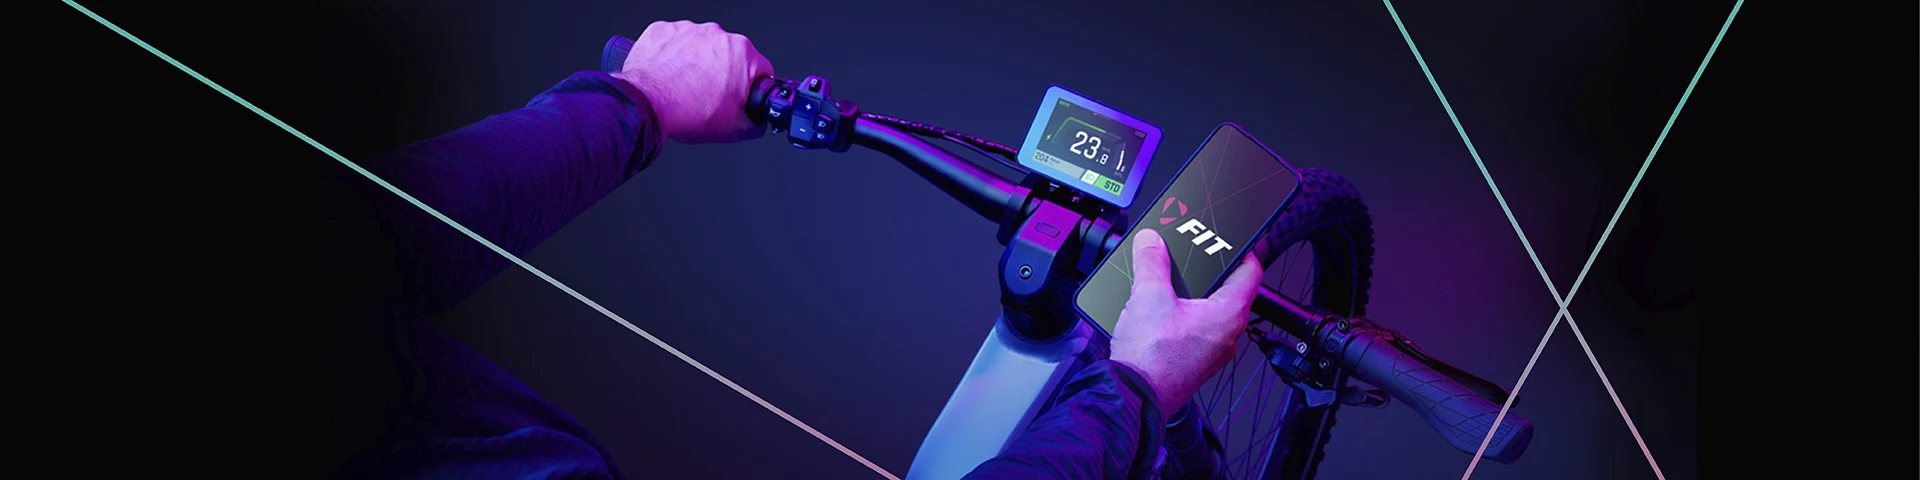 FIT Headerbild Mobile mit E-Bike Control App